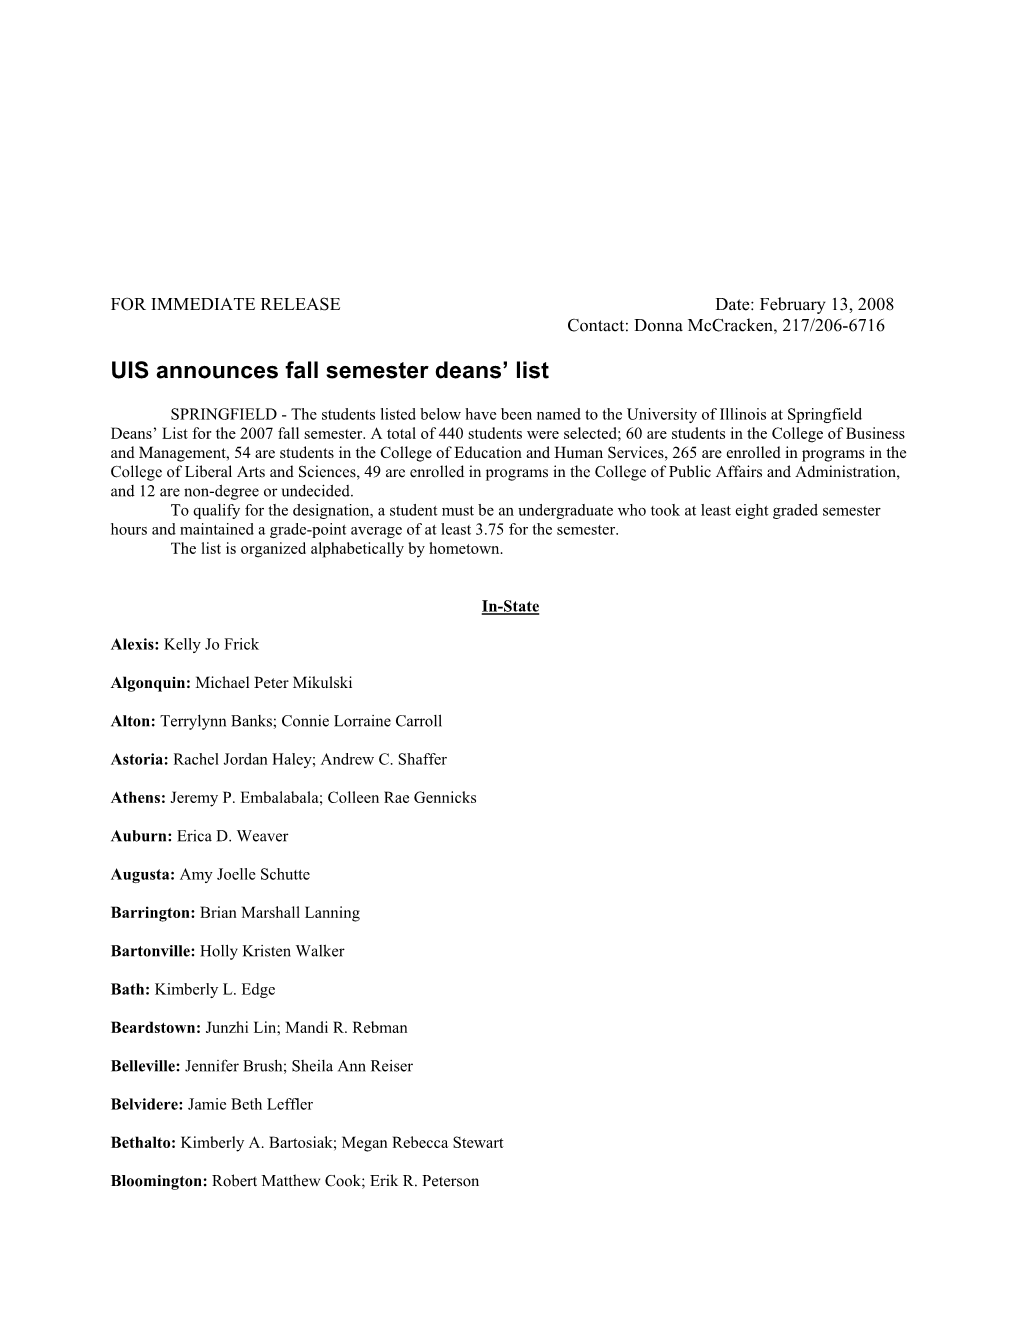 UIS Announces Fall Semester Deans' List